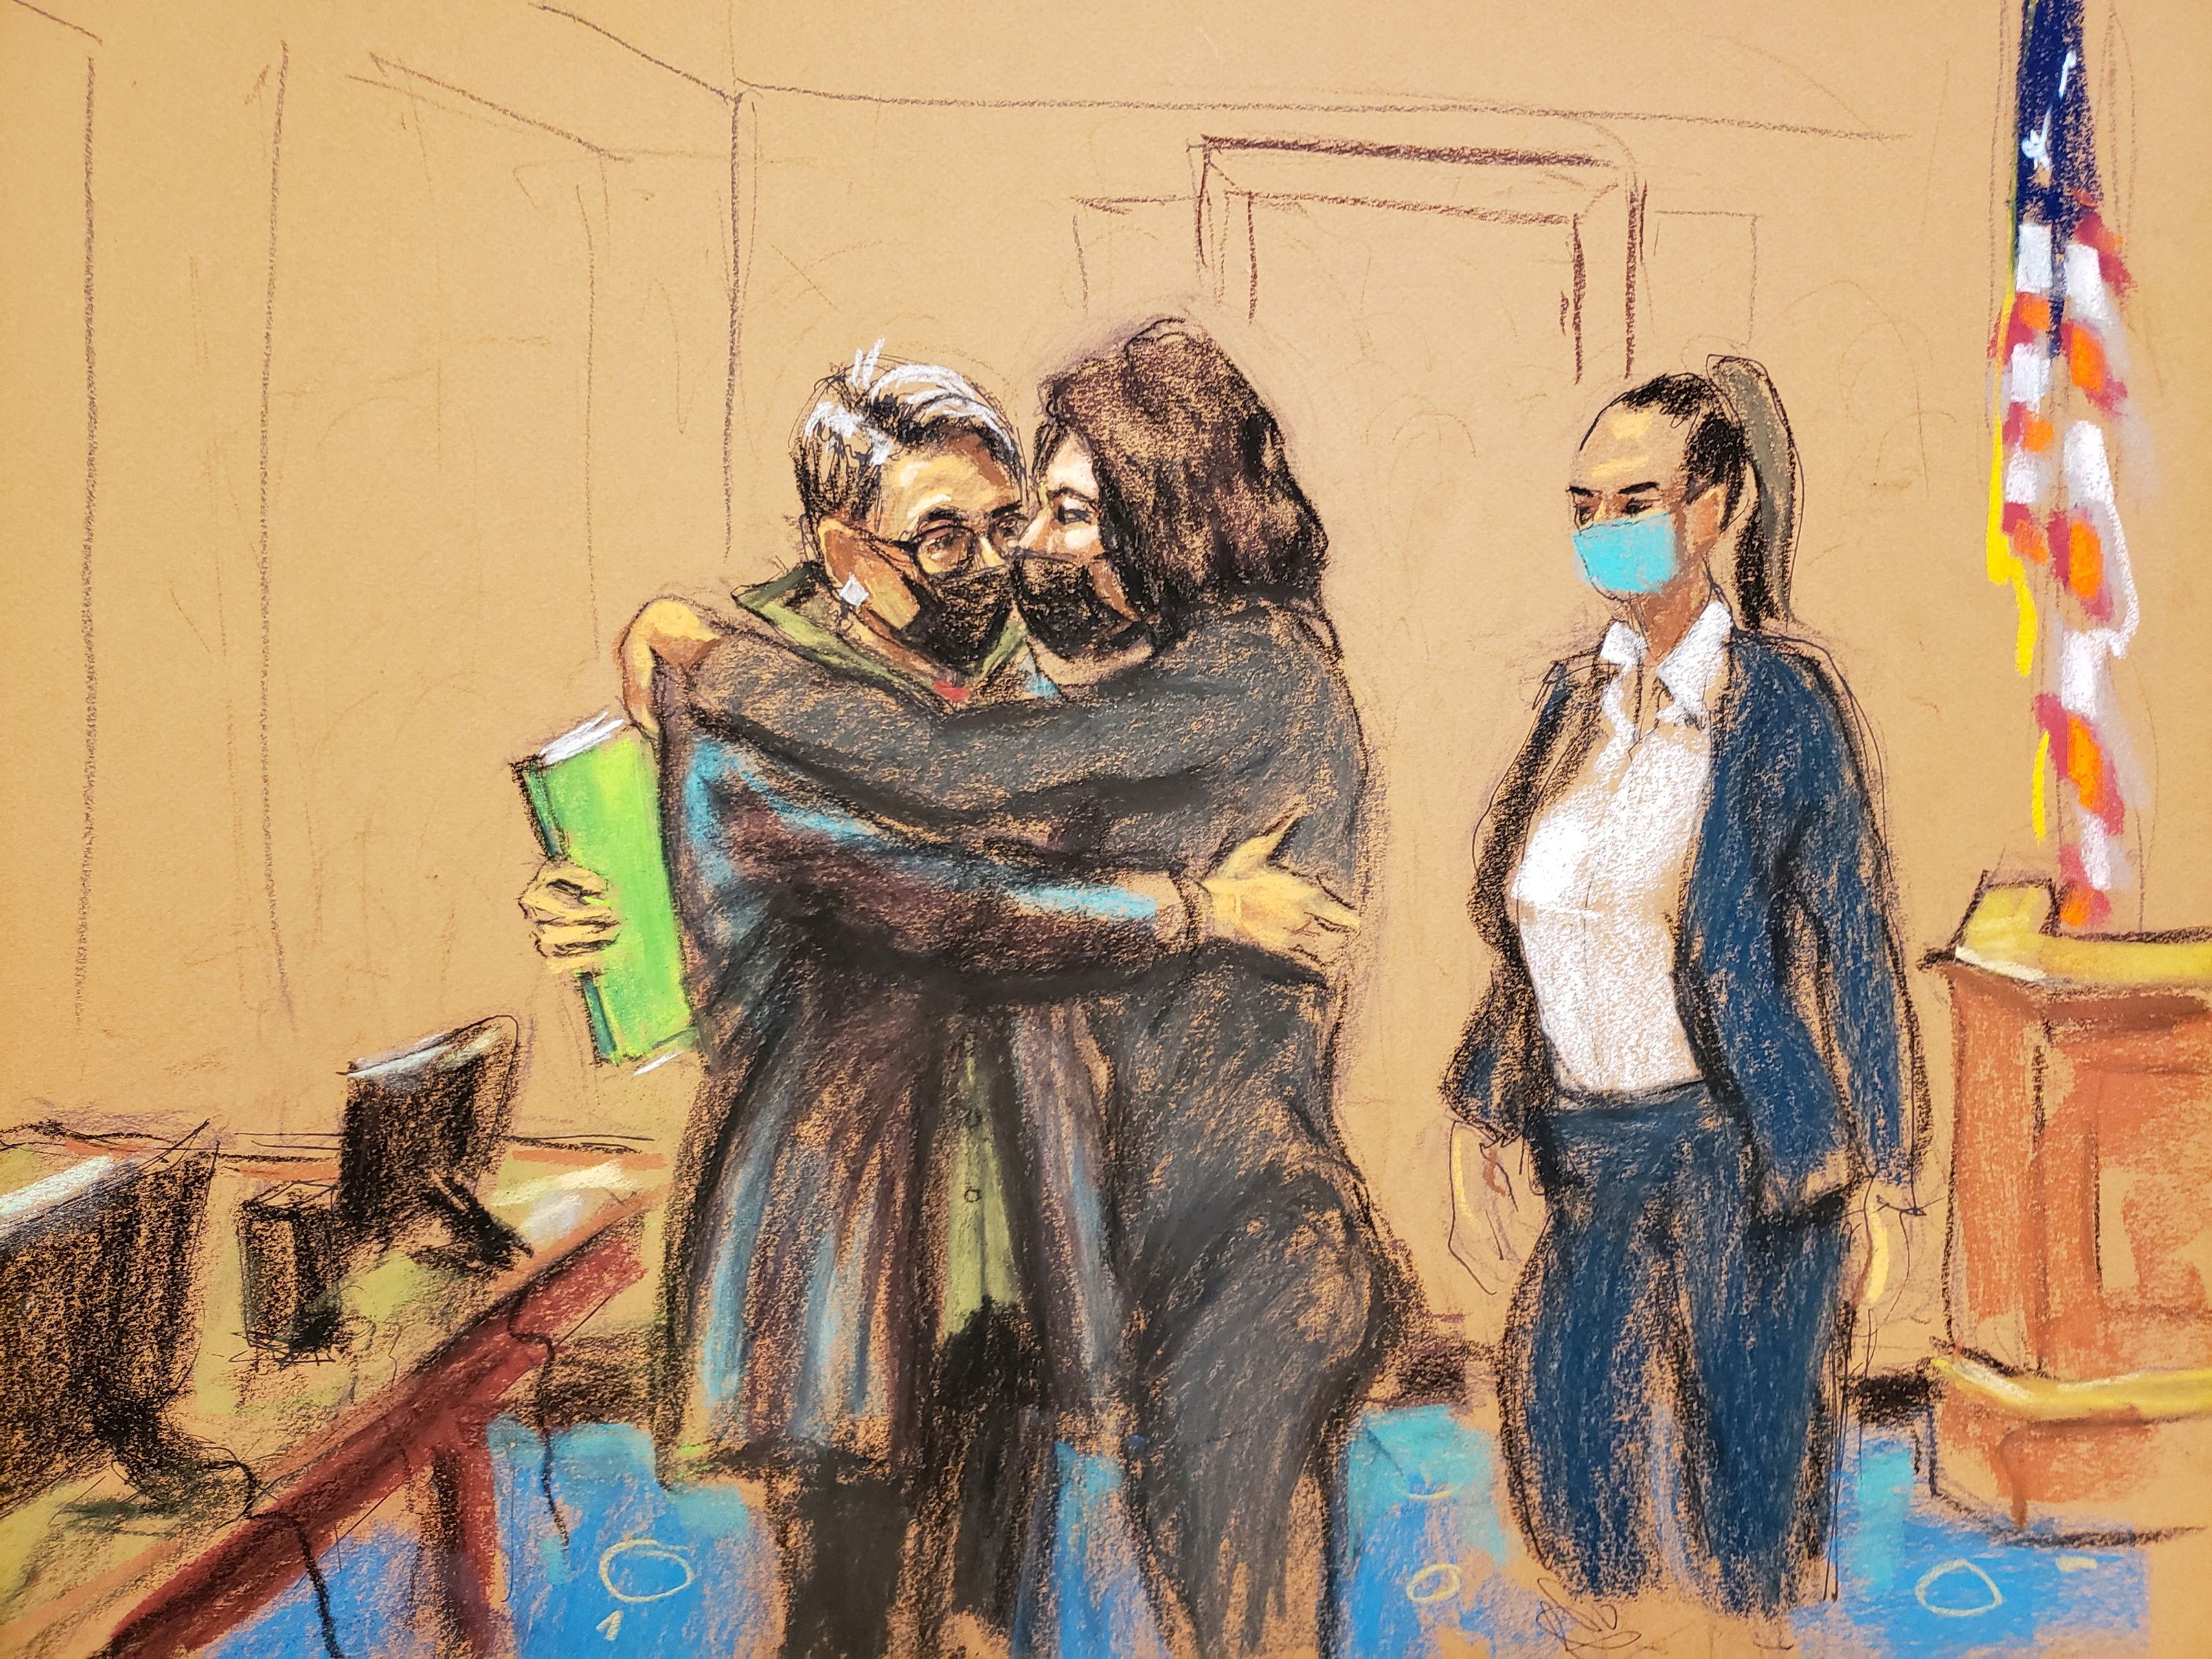 Ghislaine Maxwell trial in New York